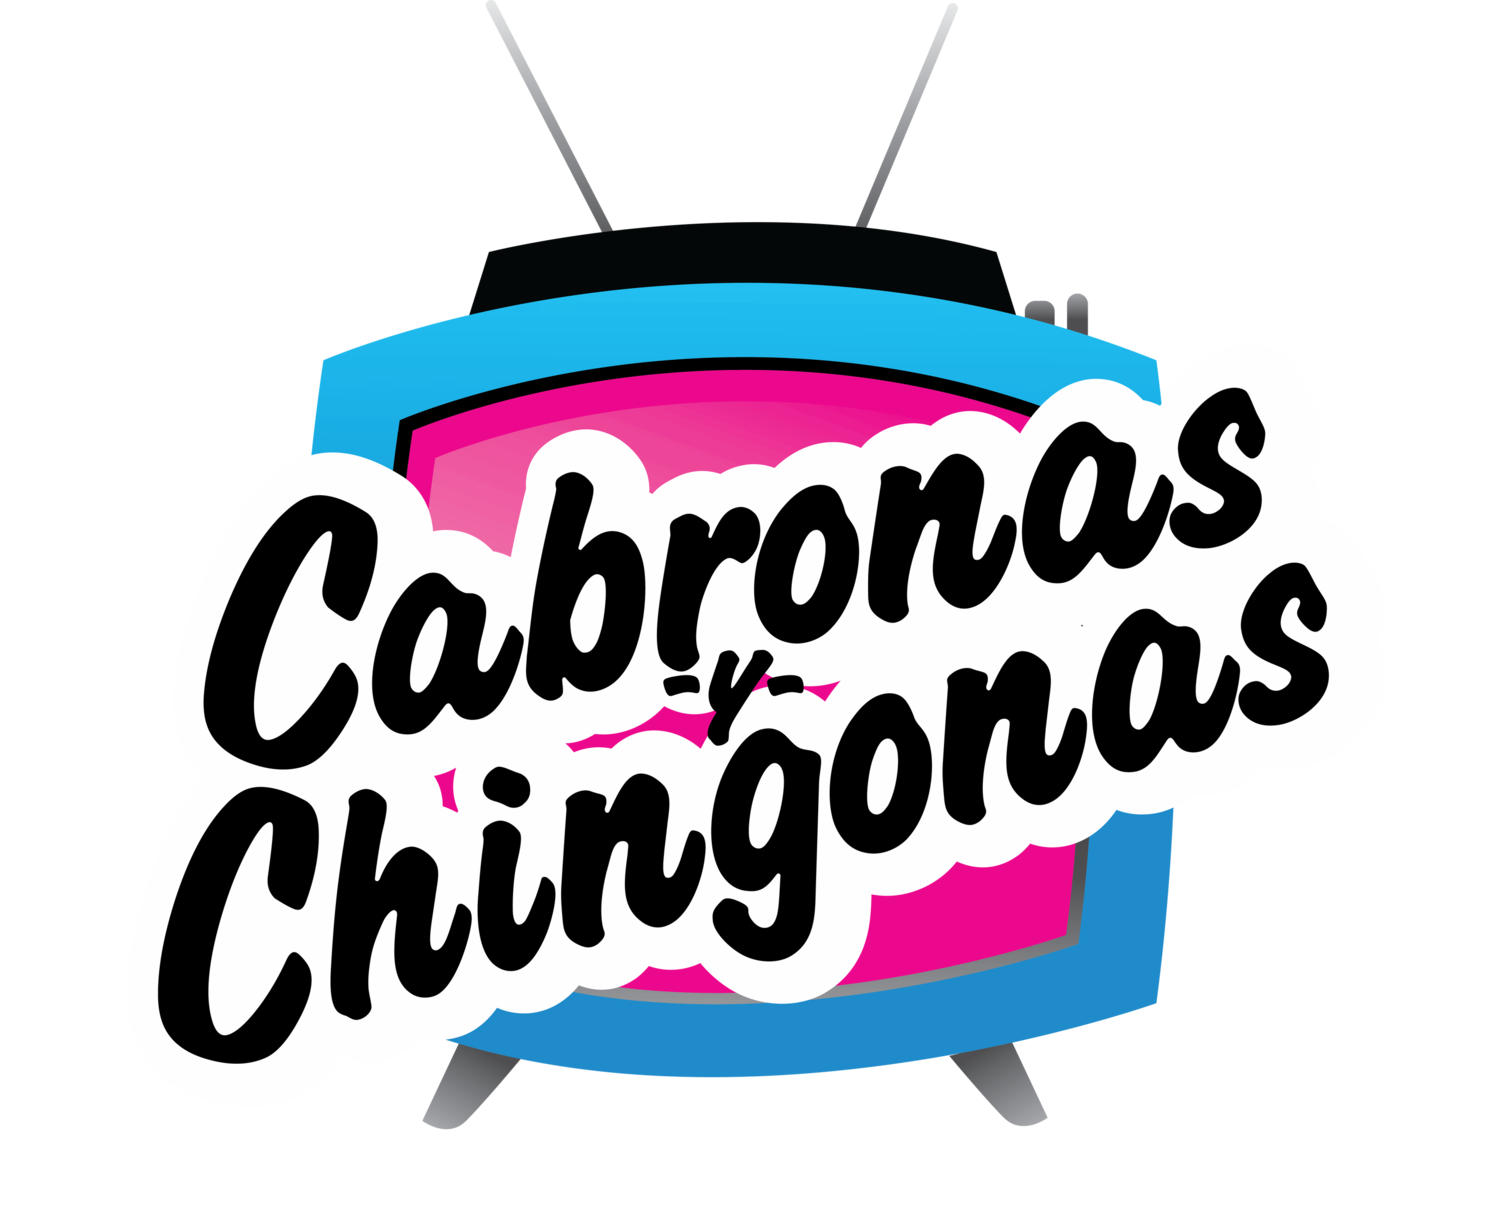 Support - Cabronas y Chingonas Podcast.